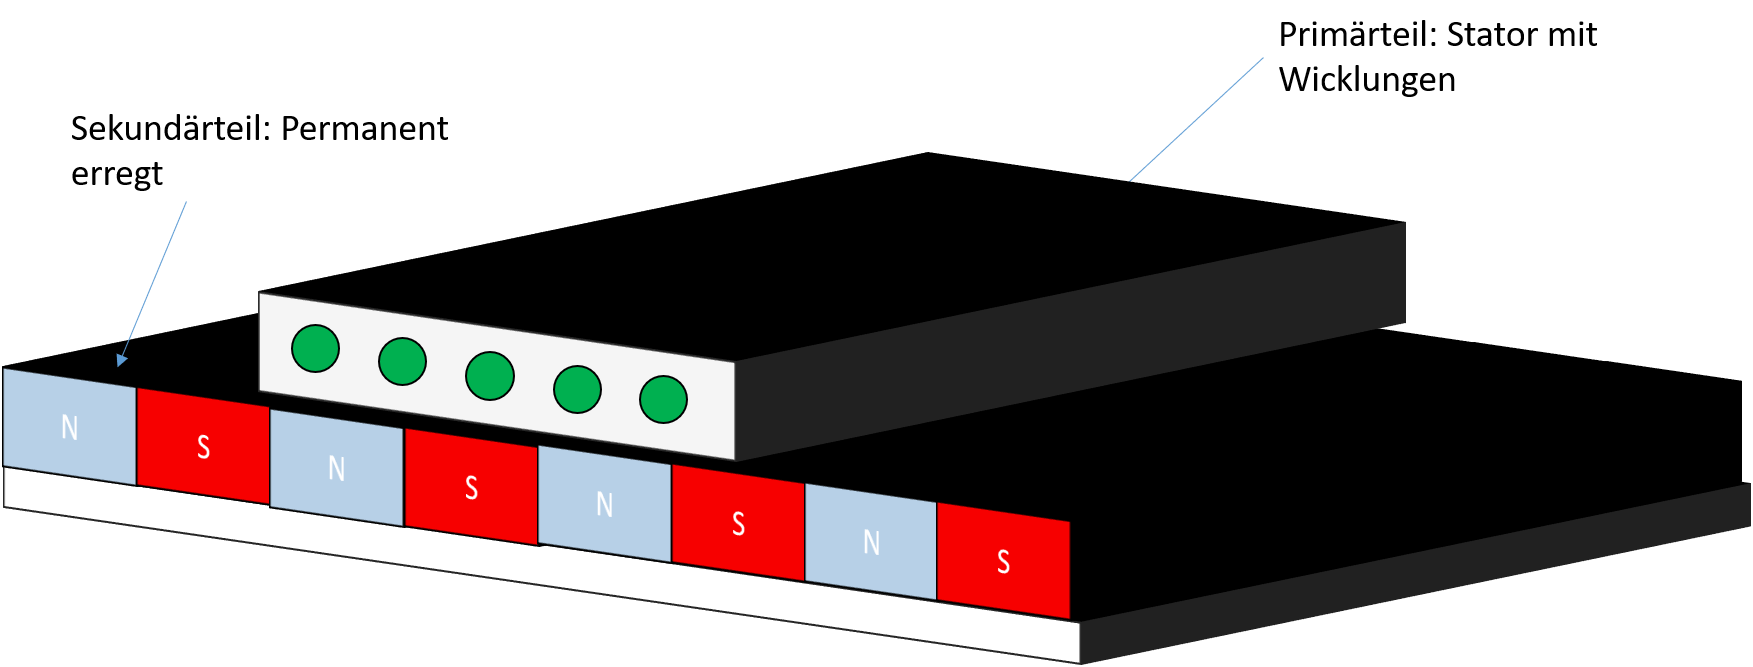 Aufbau eines synchronen Linearmotors nach Kurzstatorprinzip